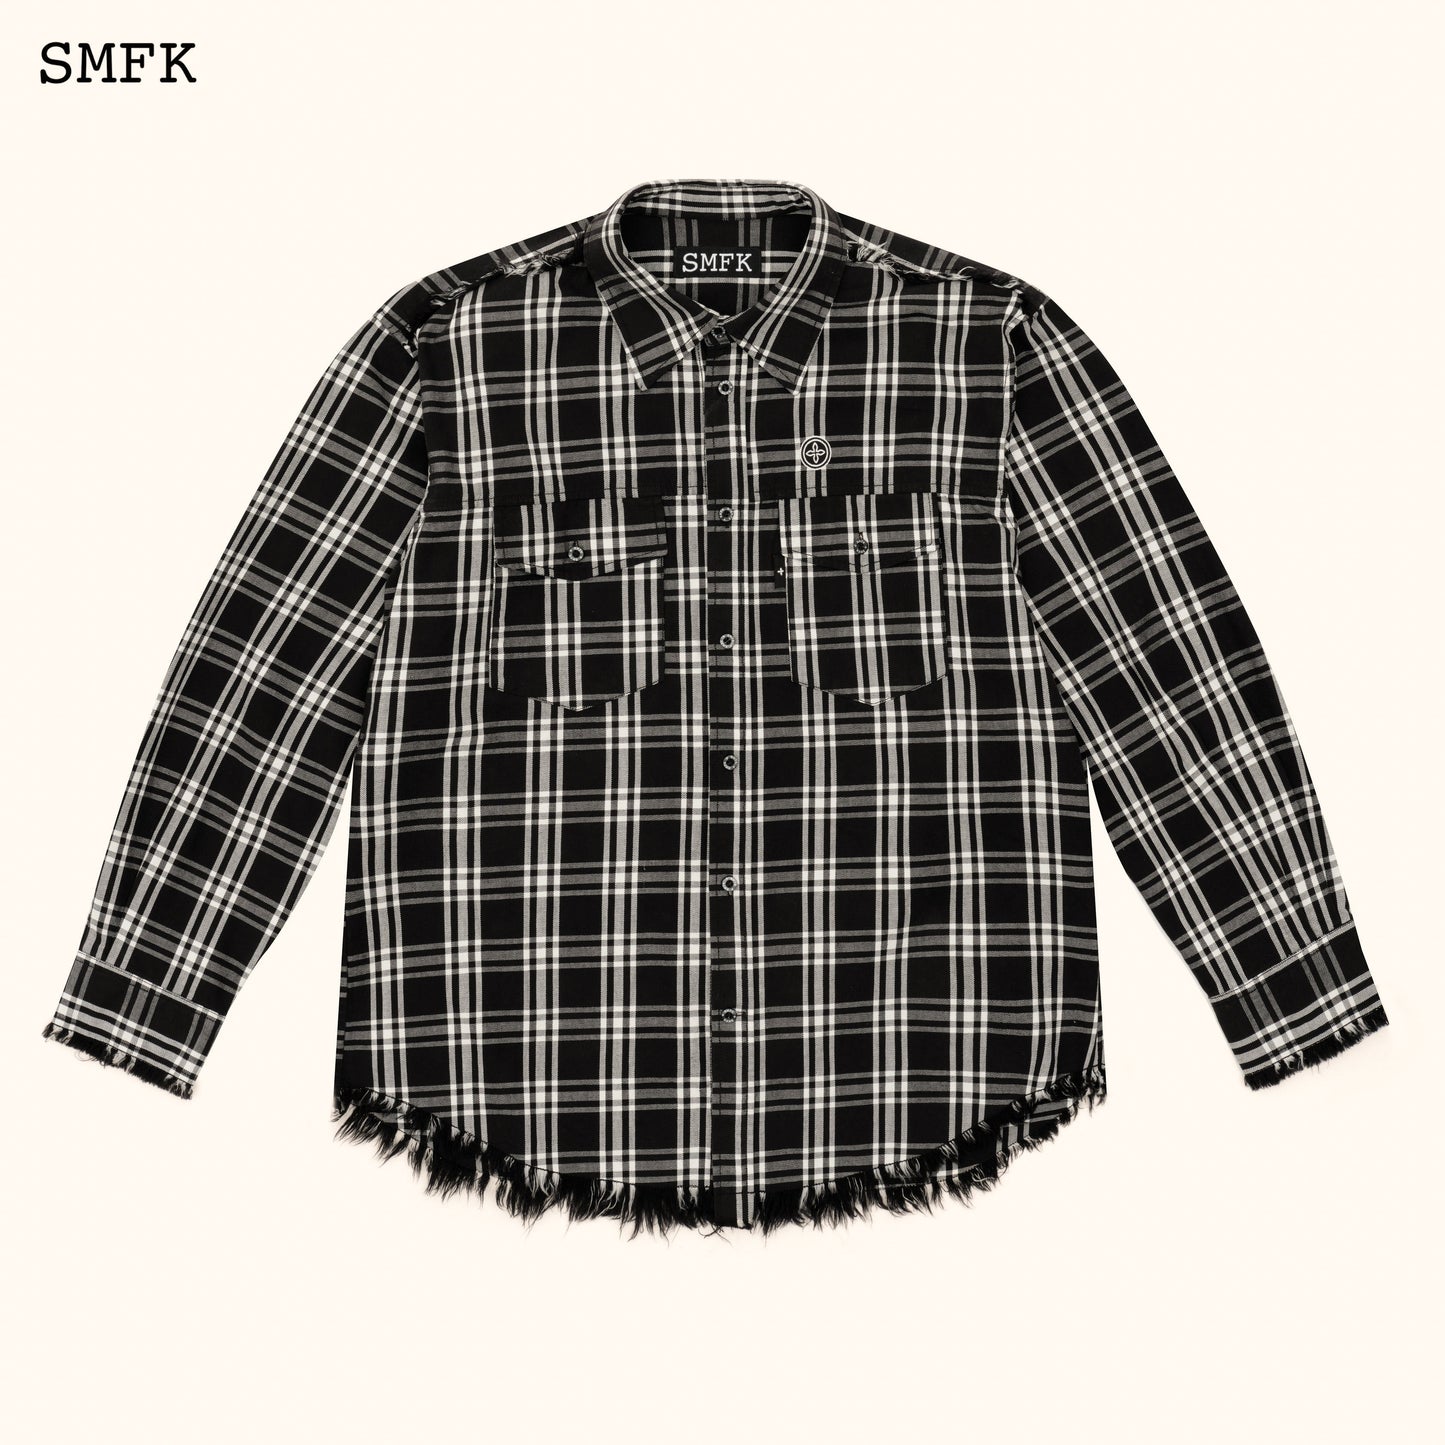 SMFK Compass Black Plaid Workwear Style Shirt